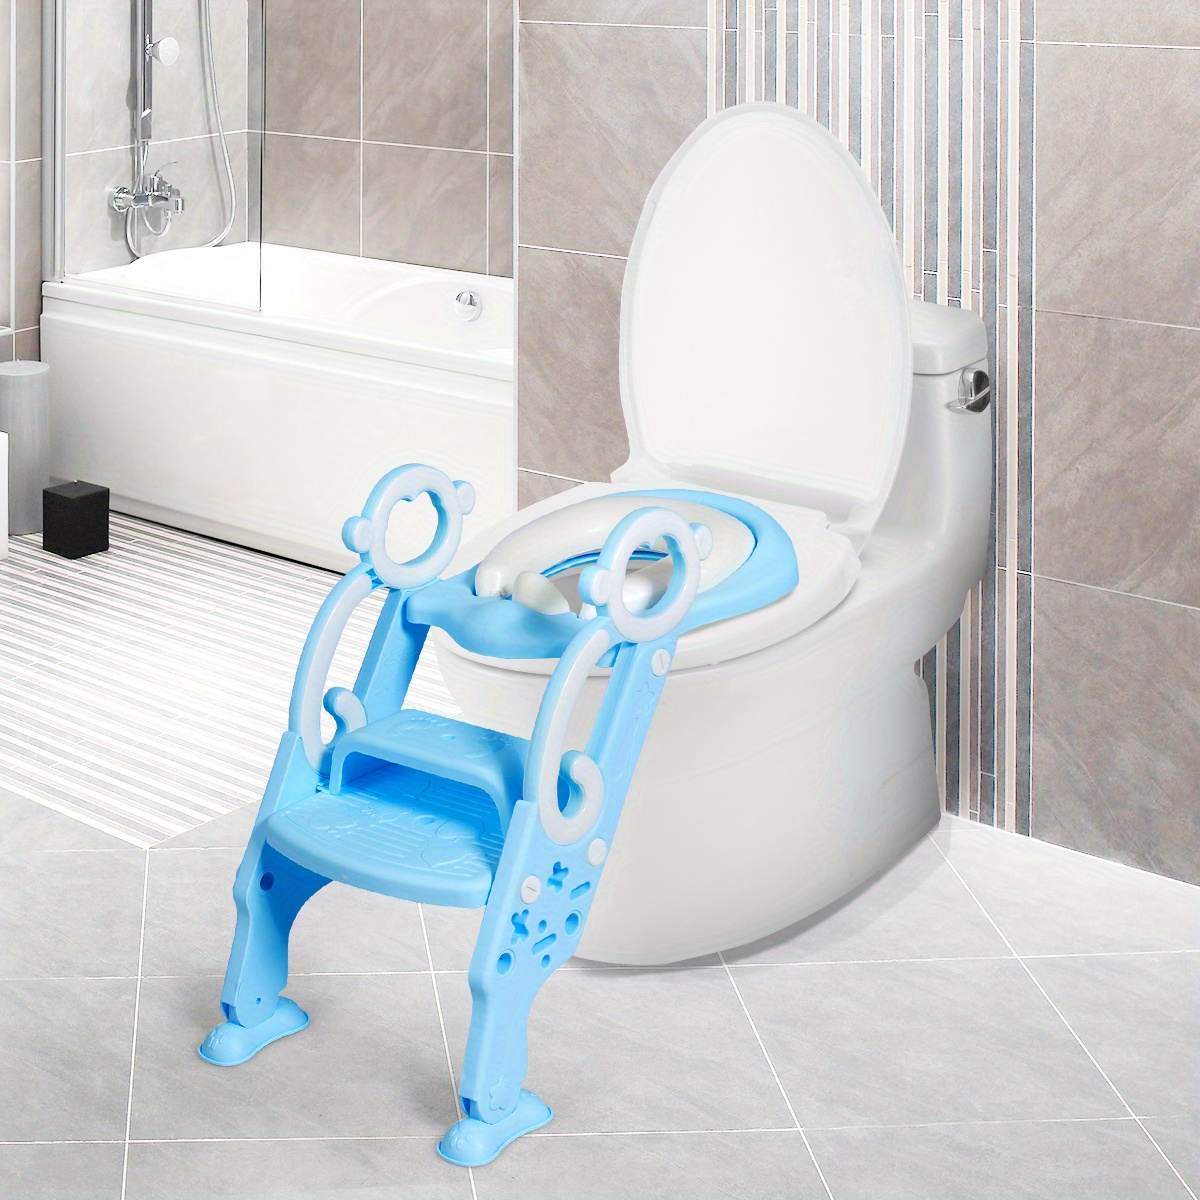 

Safstar Foldable Potty Training Toilet Seat W/ Step Stool Ladder Adjustable